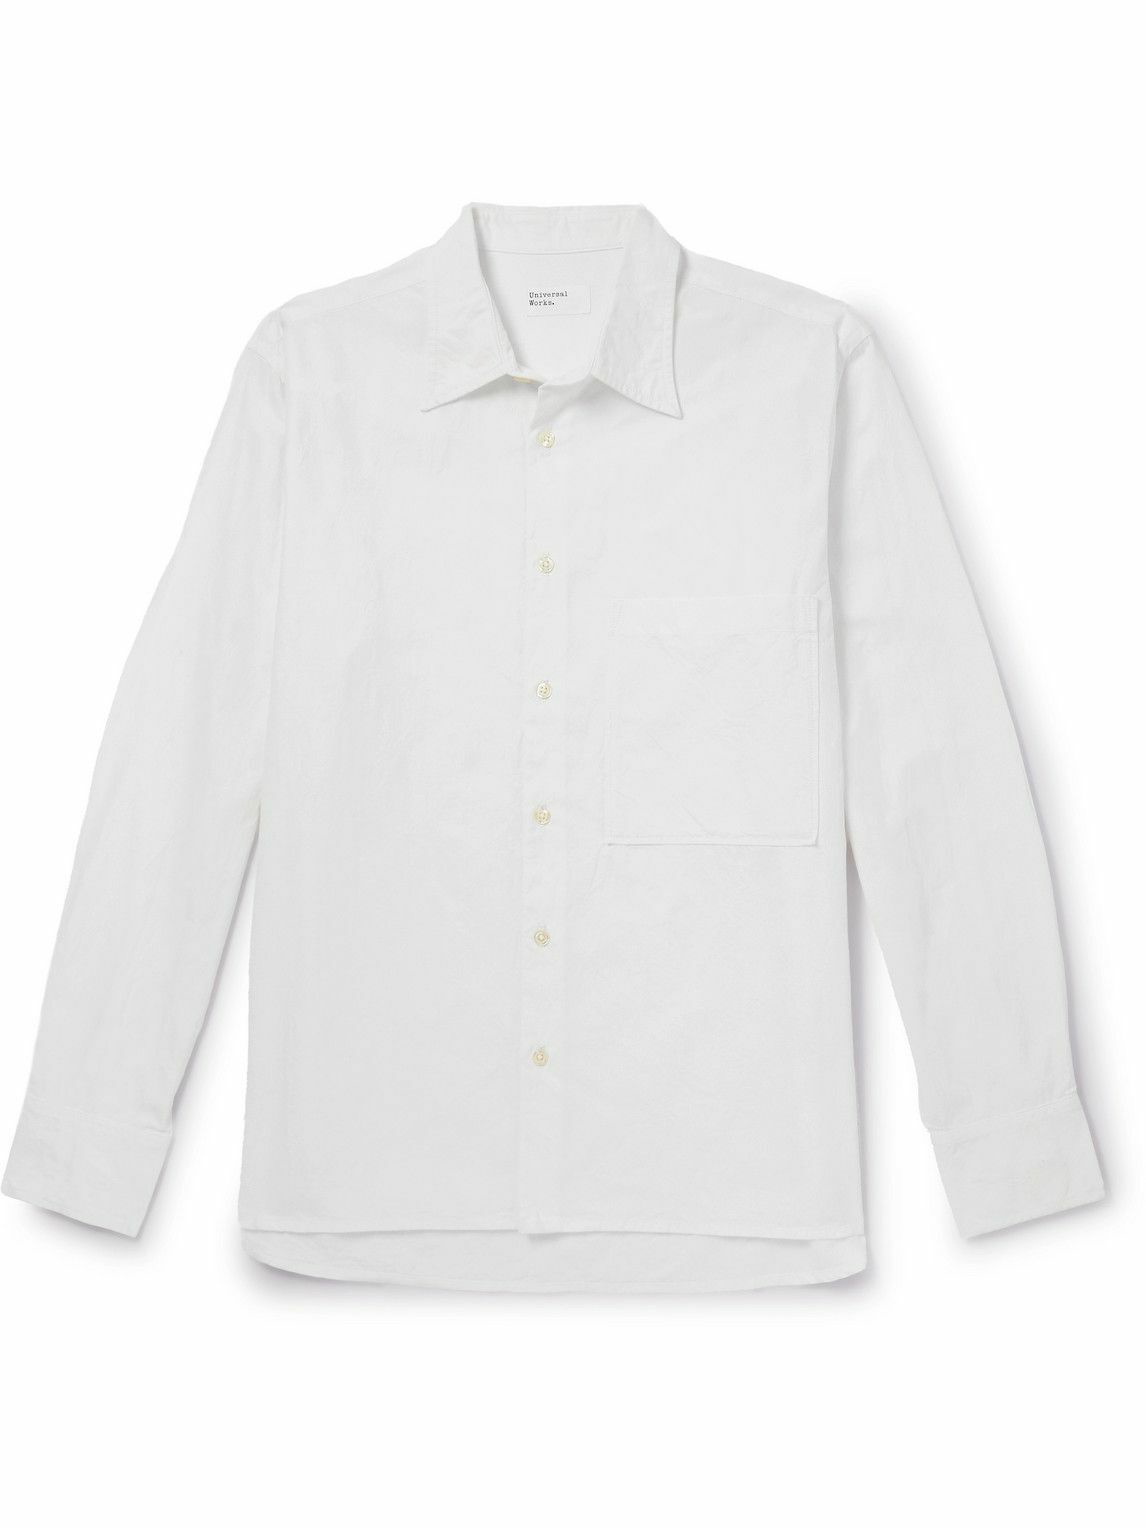 Universal Works - Tokyo Cotton-Jacquard Shirt - White Universal Works